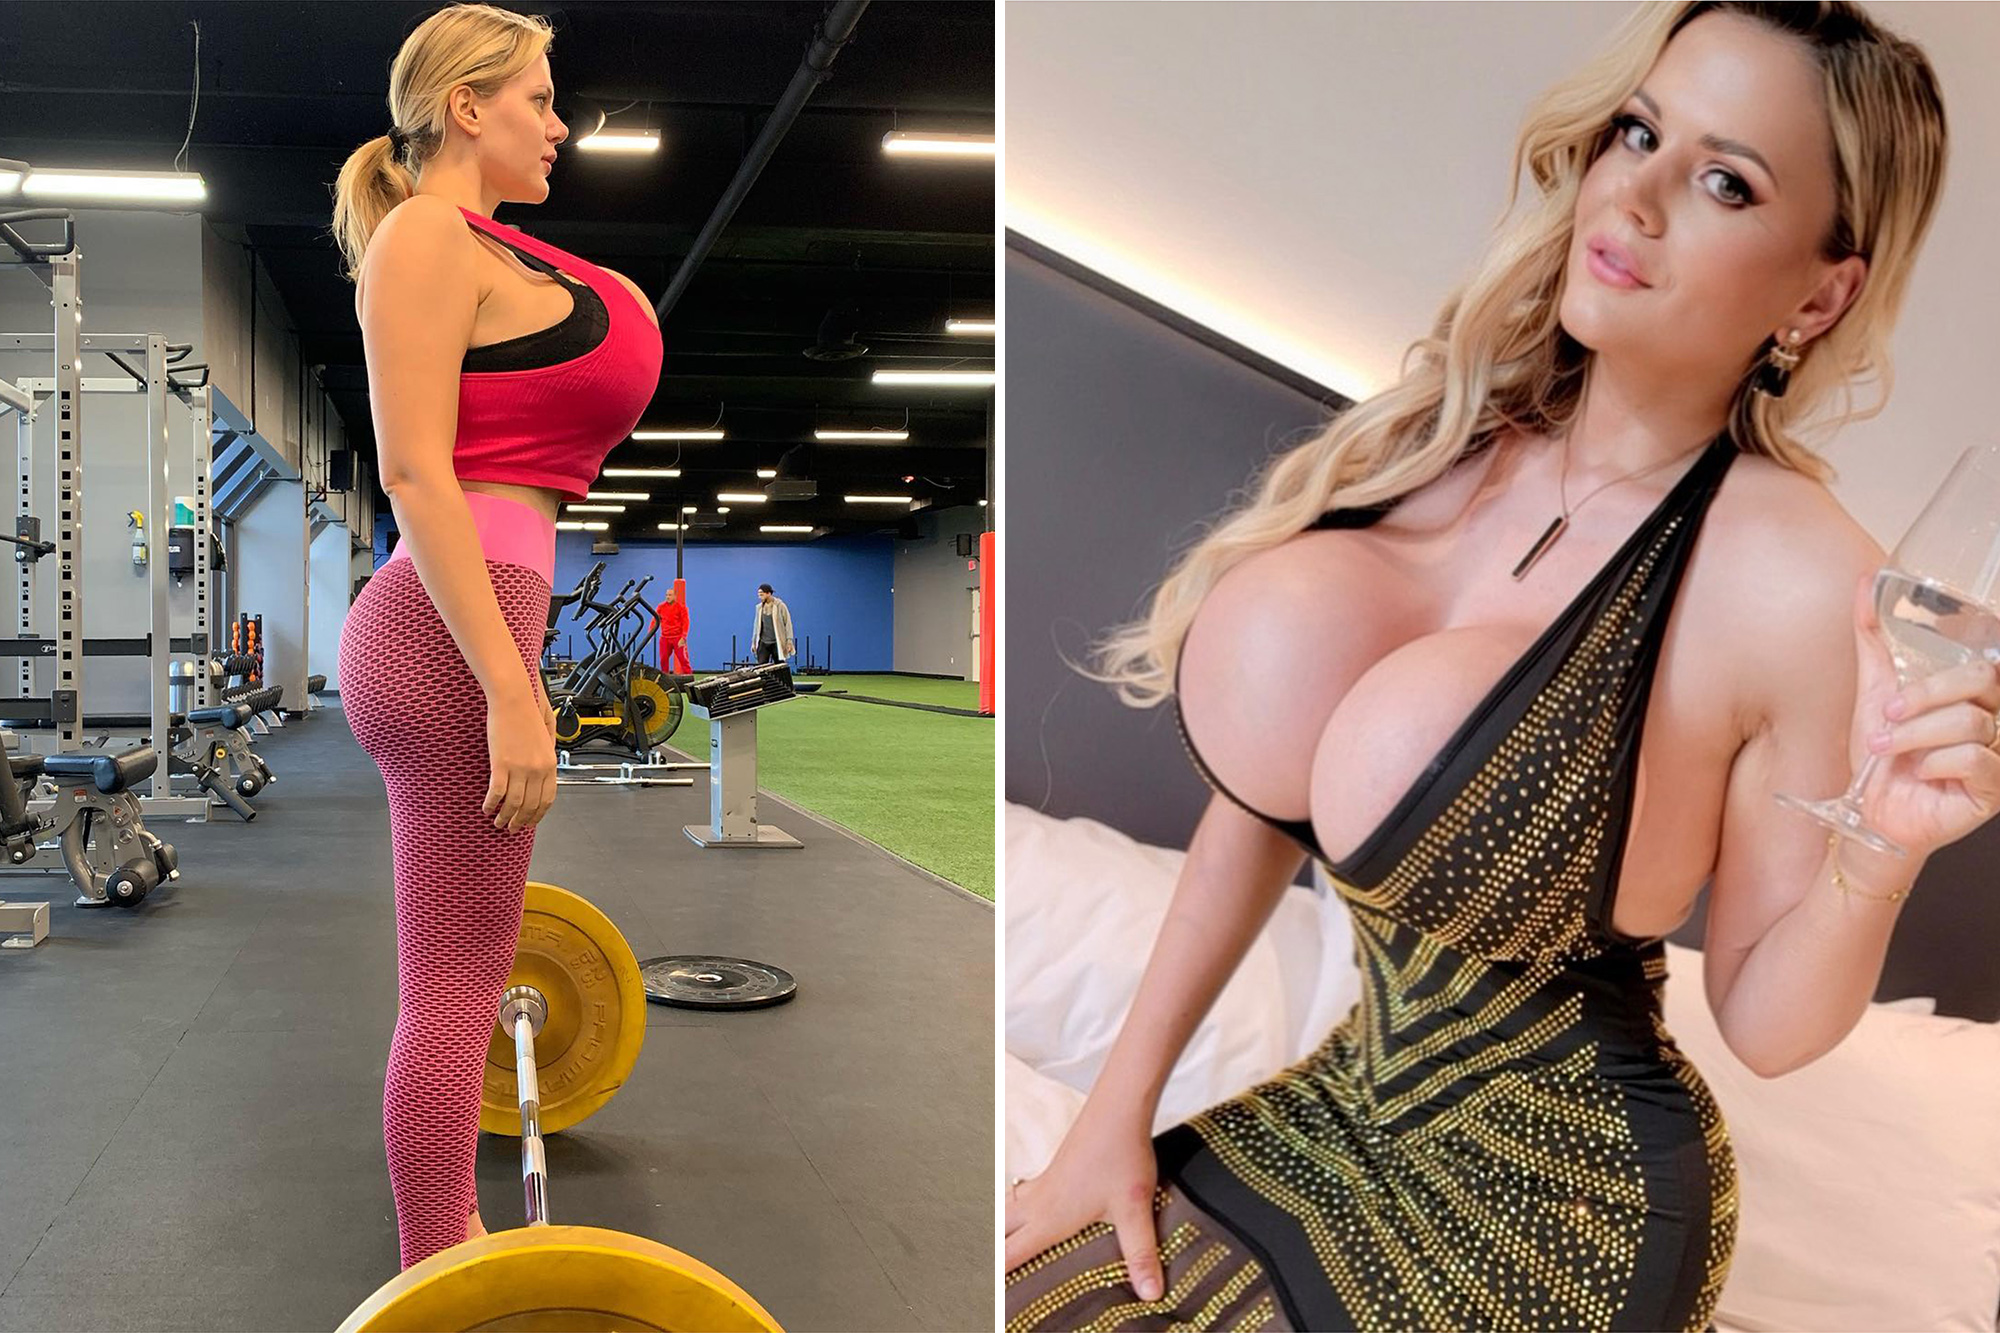 chelsey gorczyca share fake tits wife photos